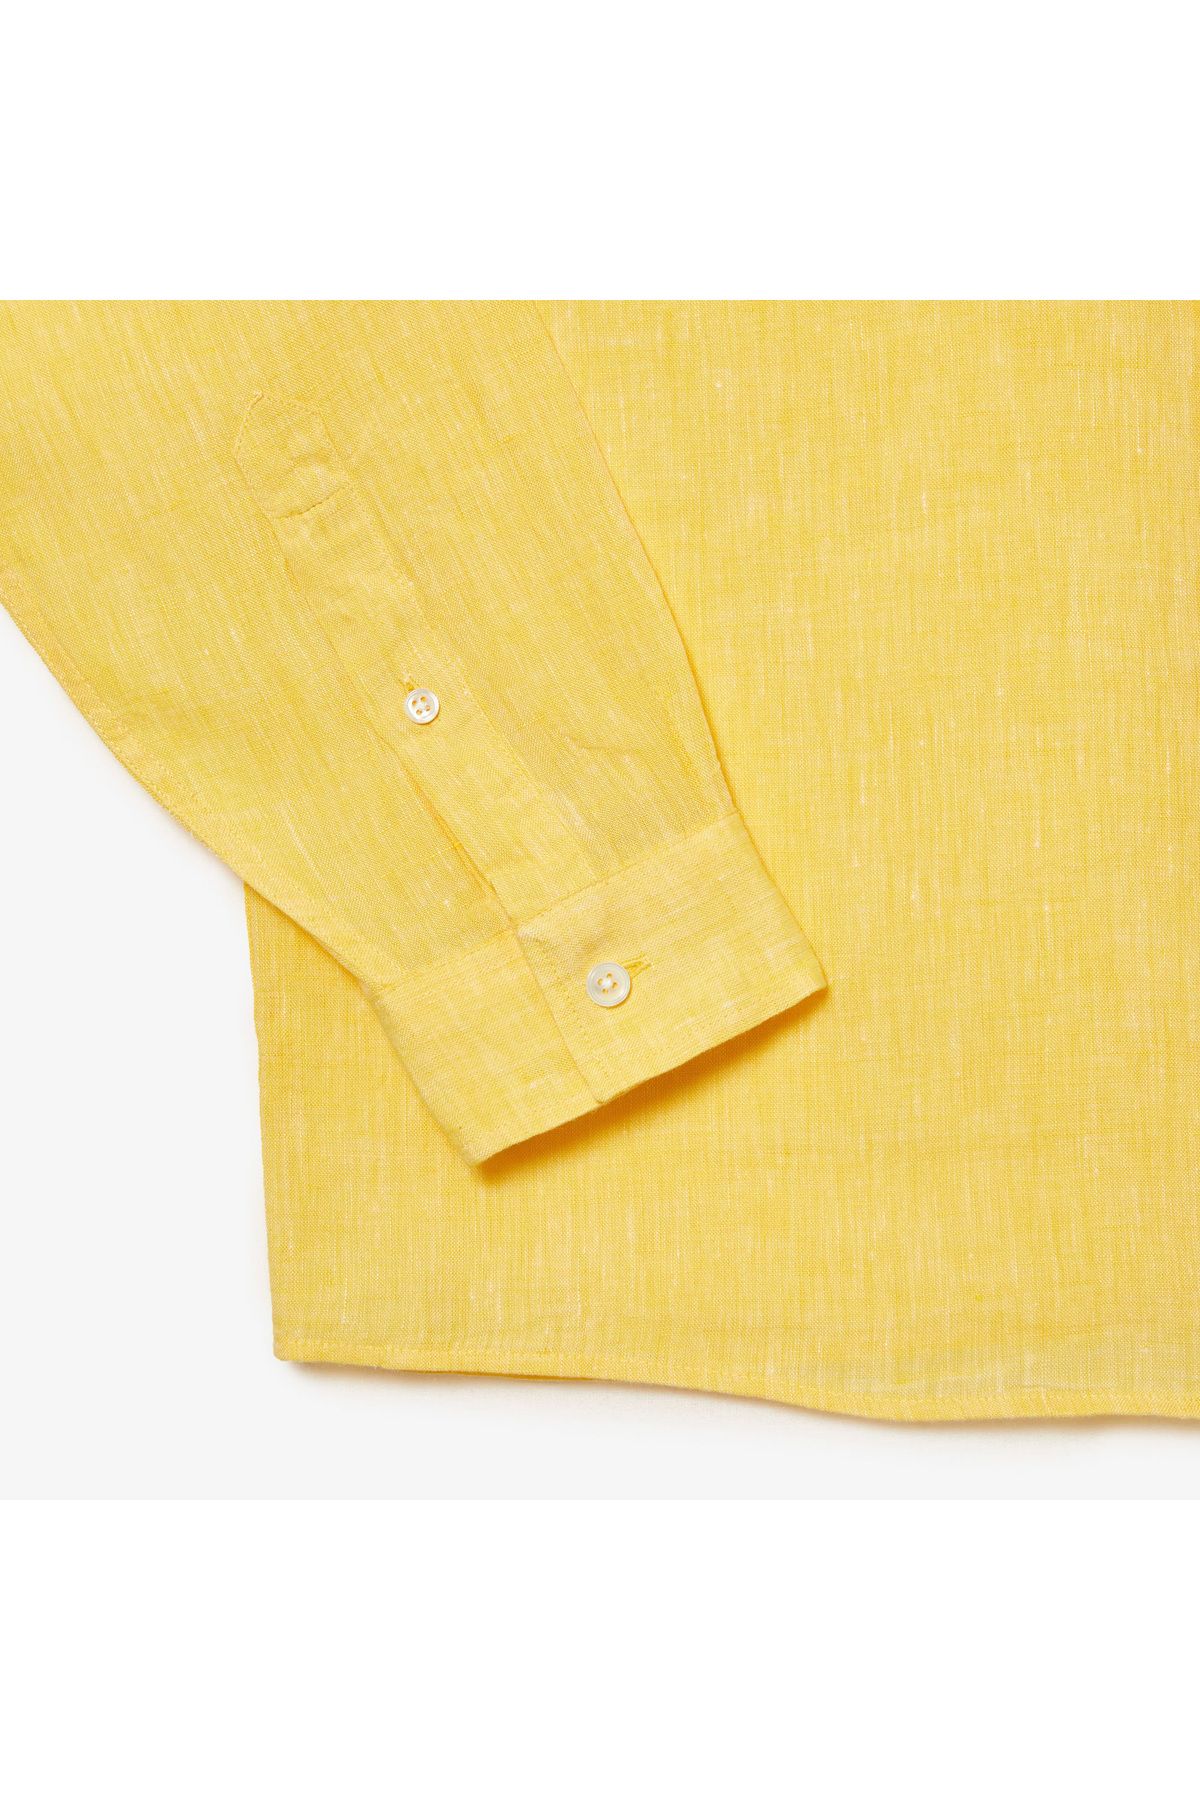 Lacoste پیراهن زرد کتانی معمولی مردانه